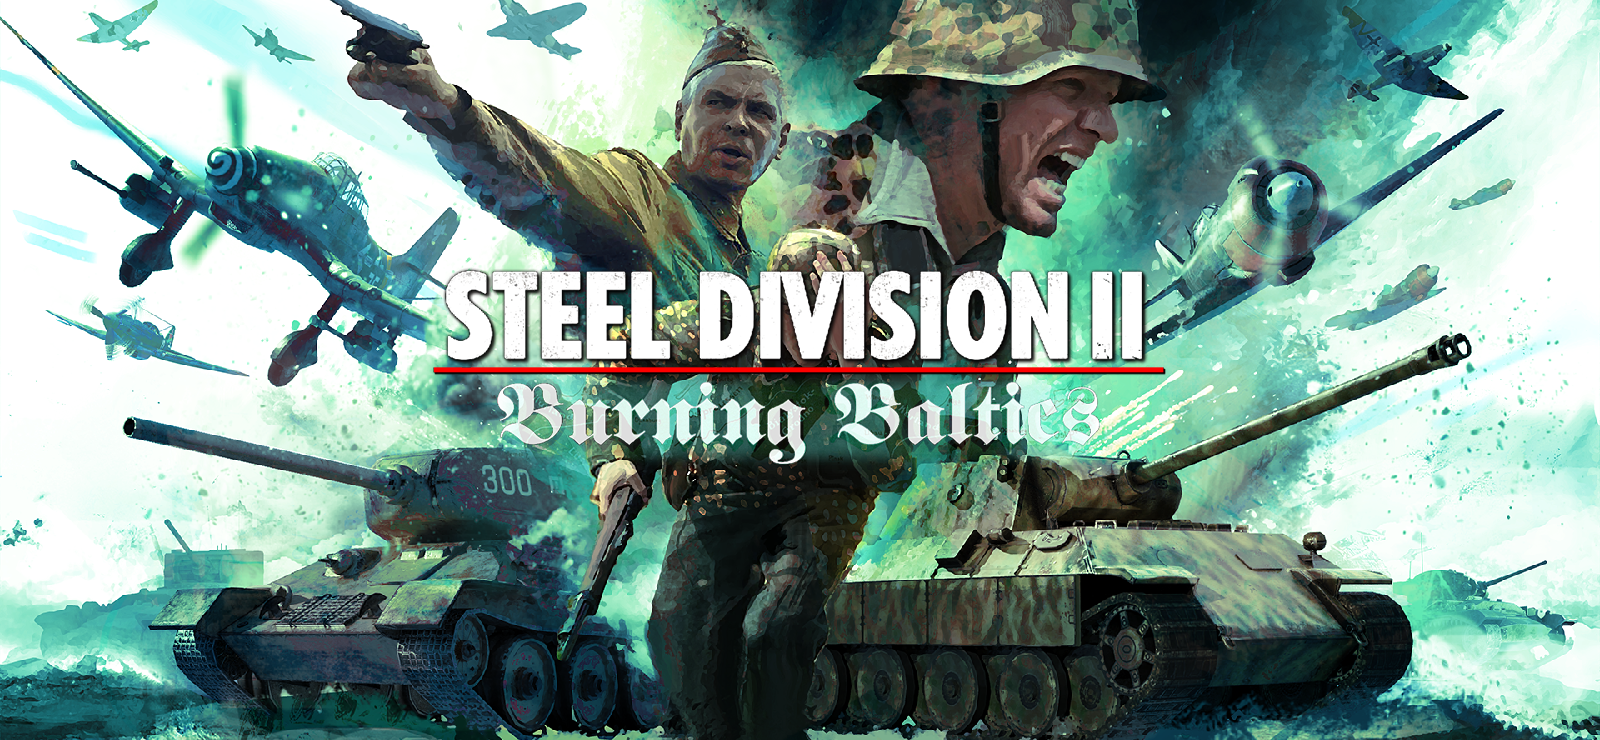 Steel Division 2: Burning Baltics